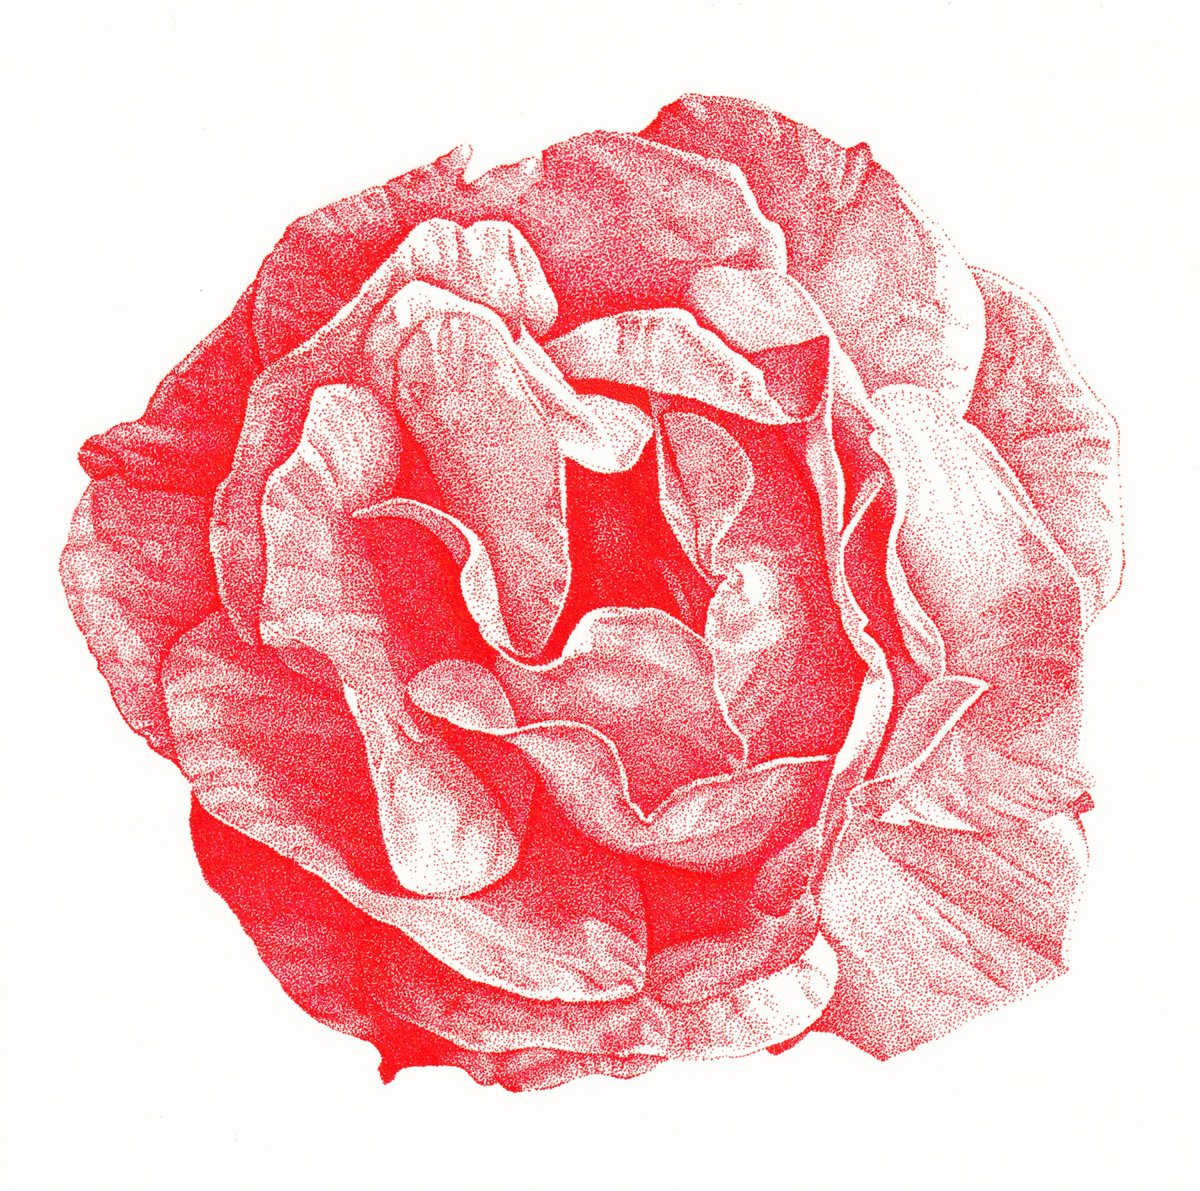 Red Rose by Louis Savage